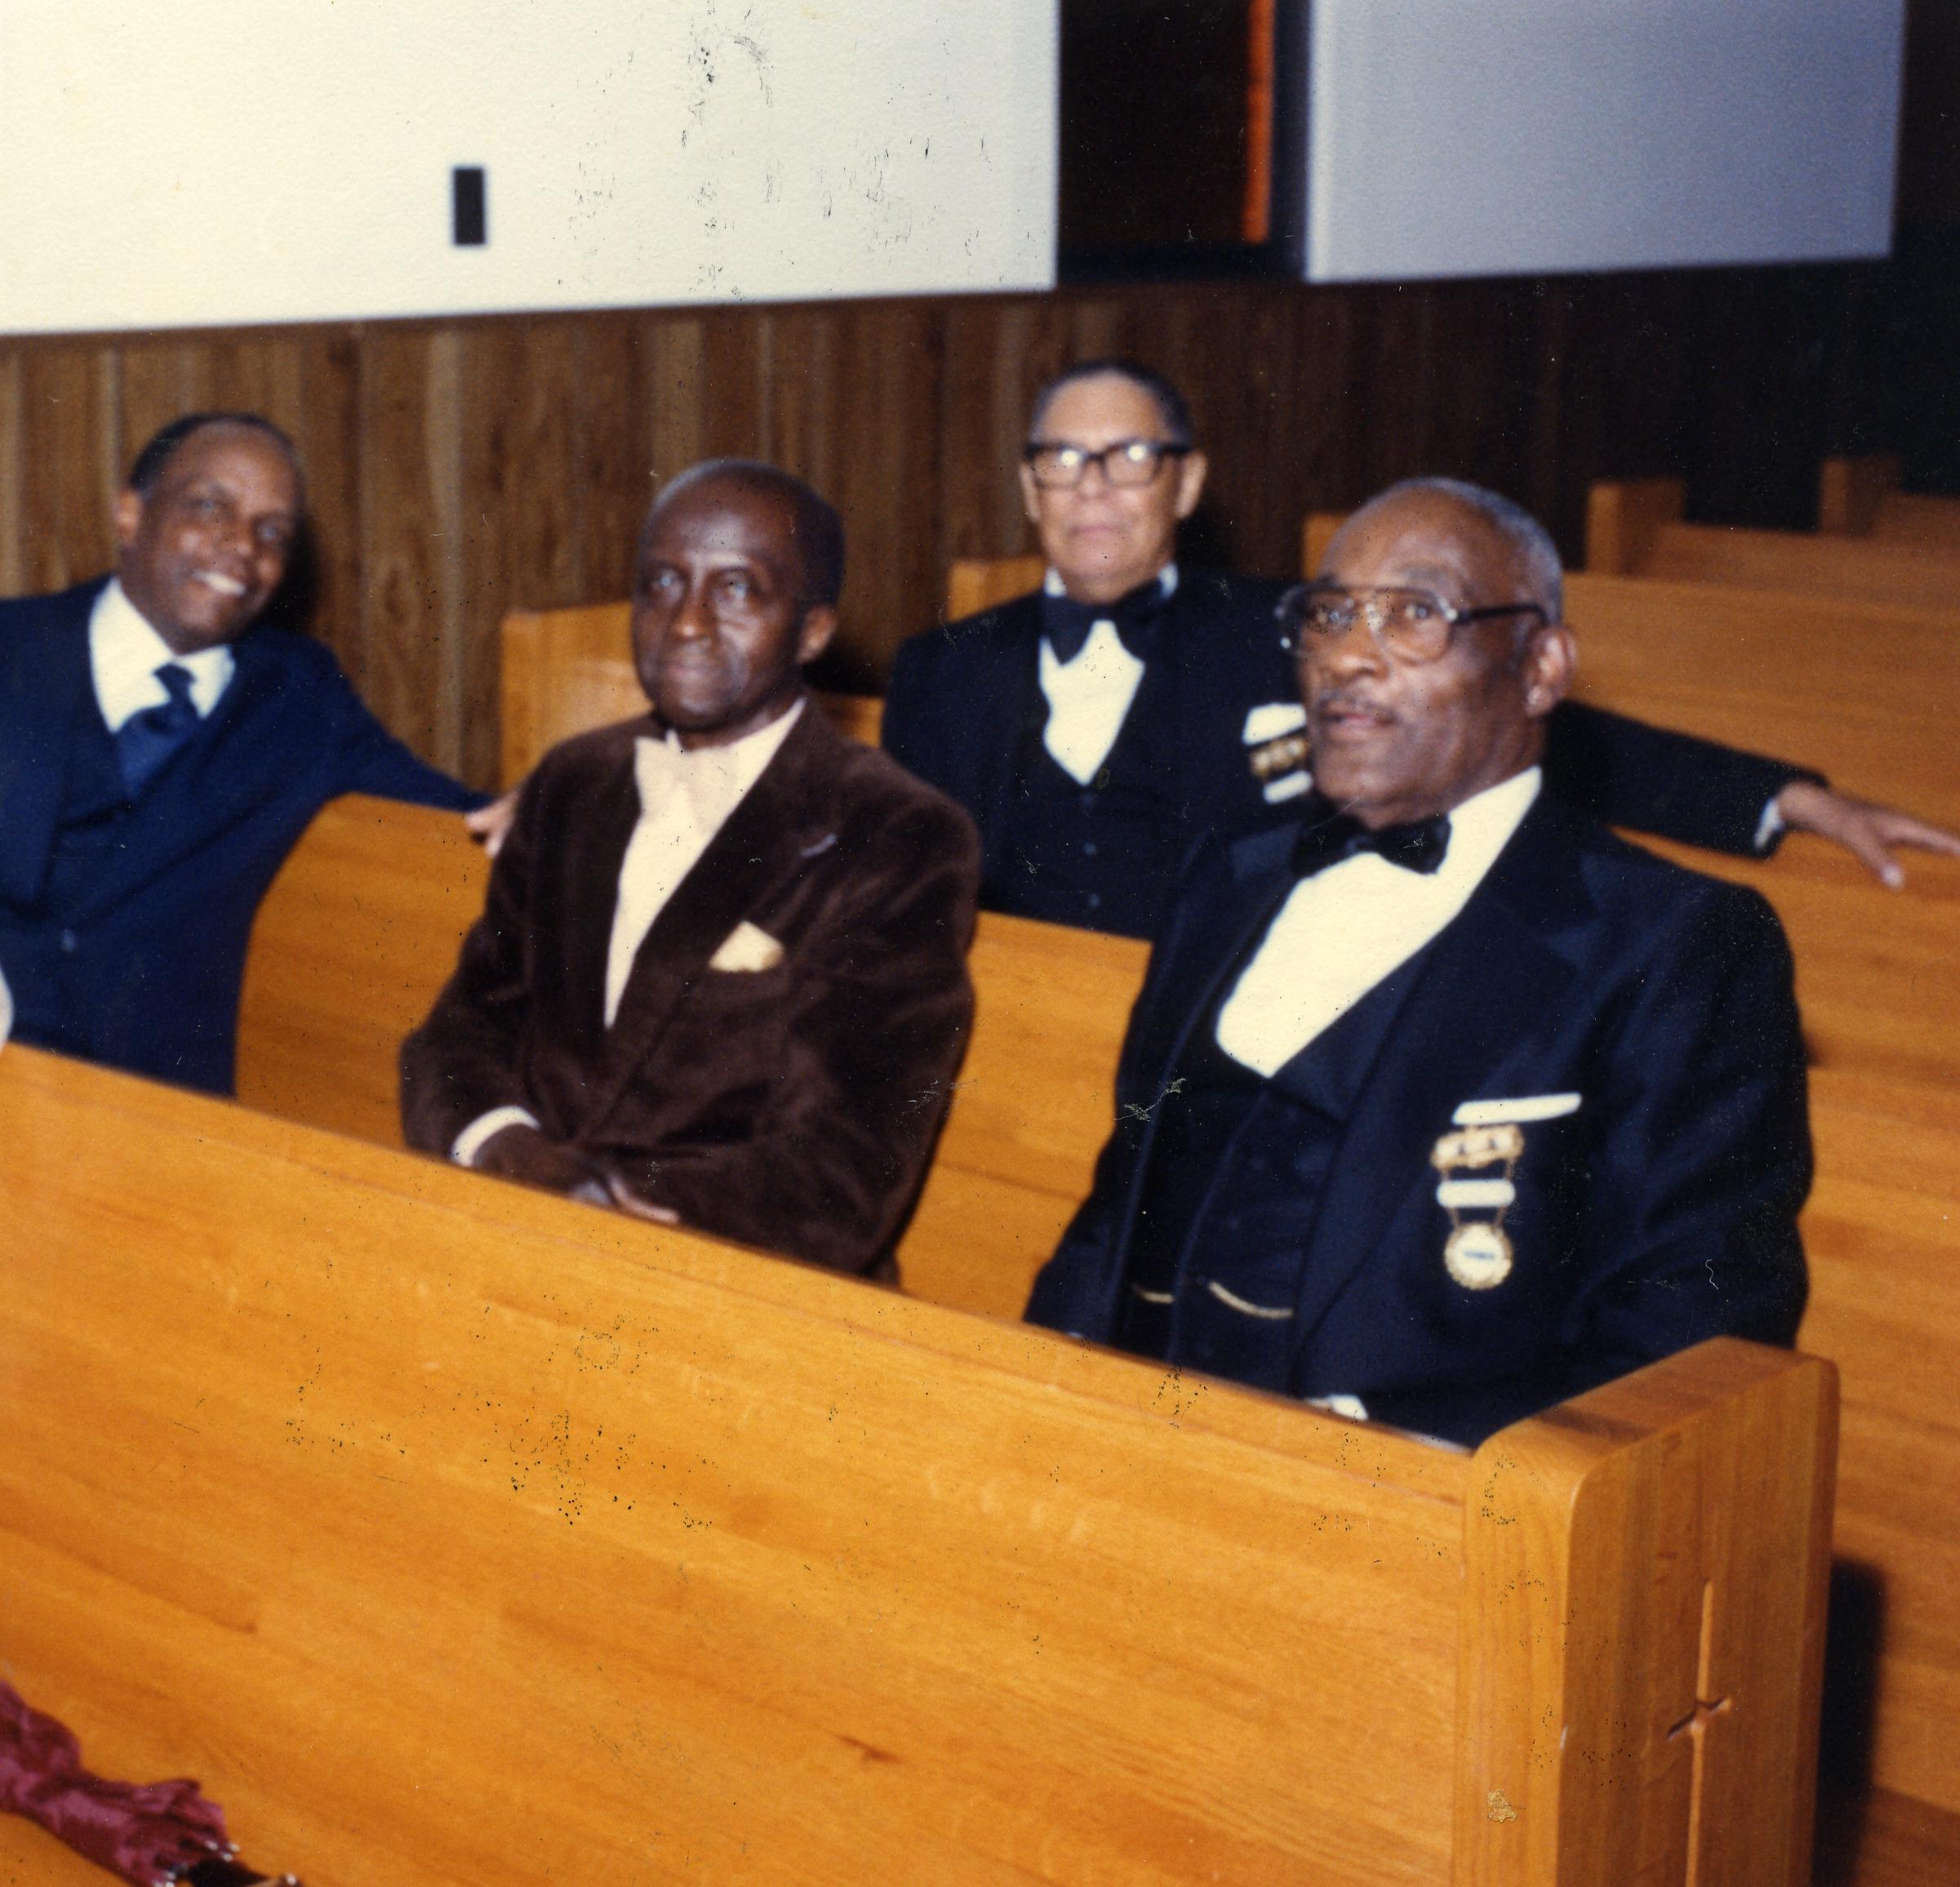 Men at Embry AME Church